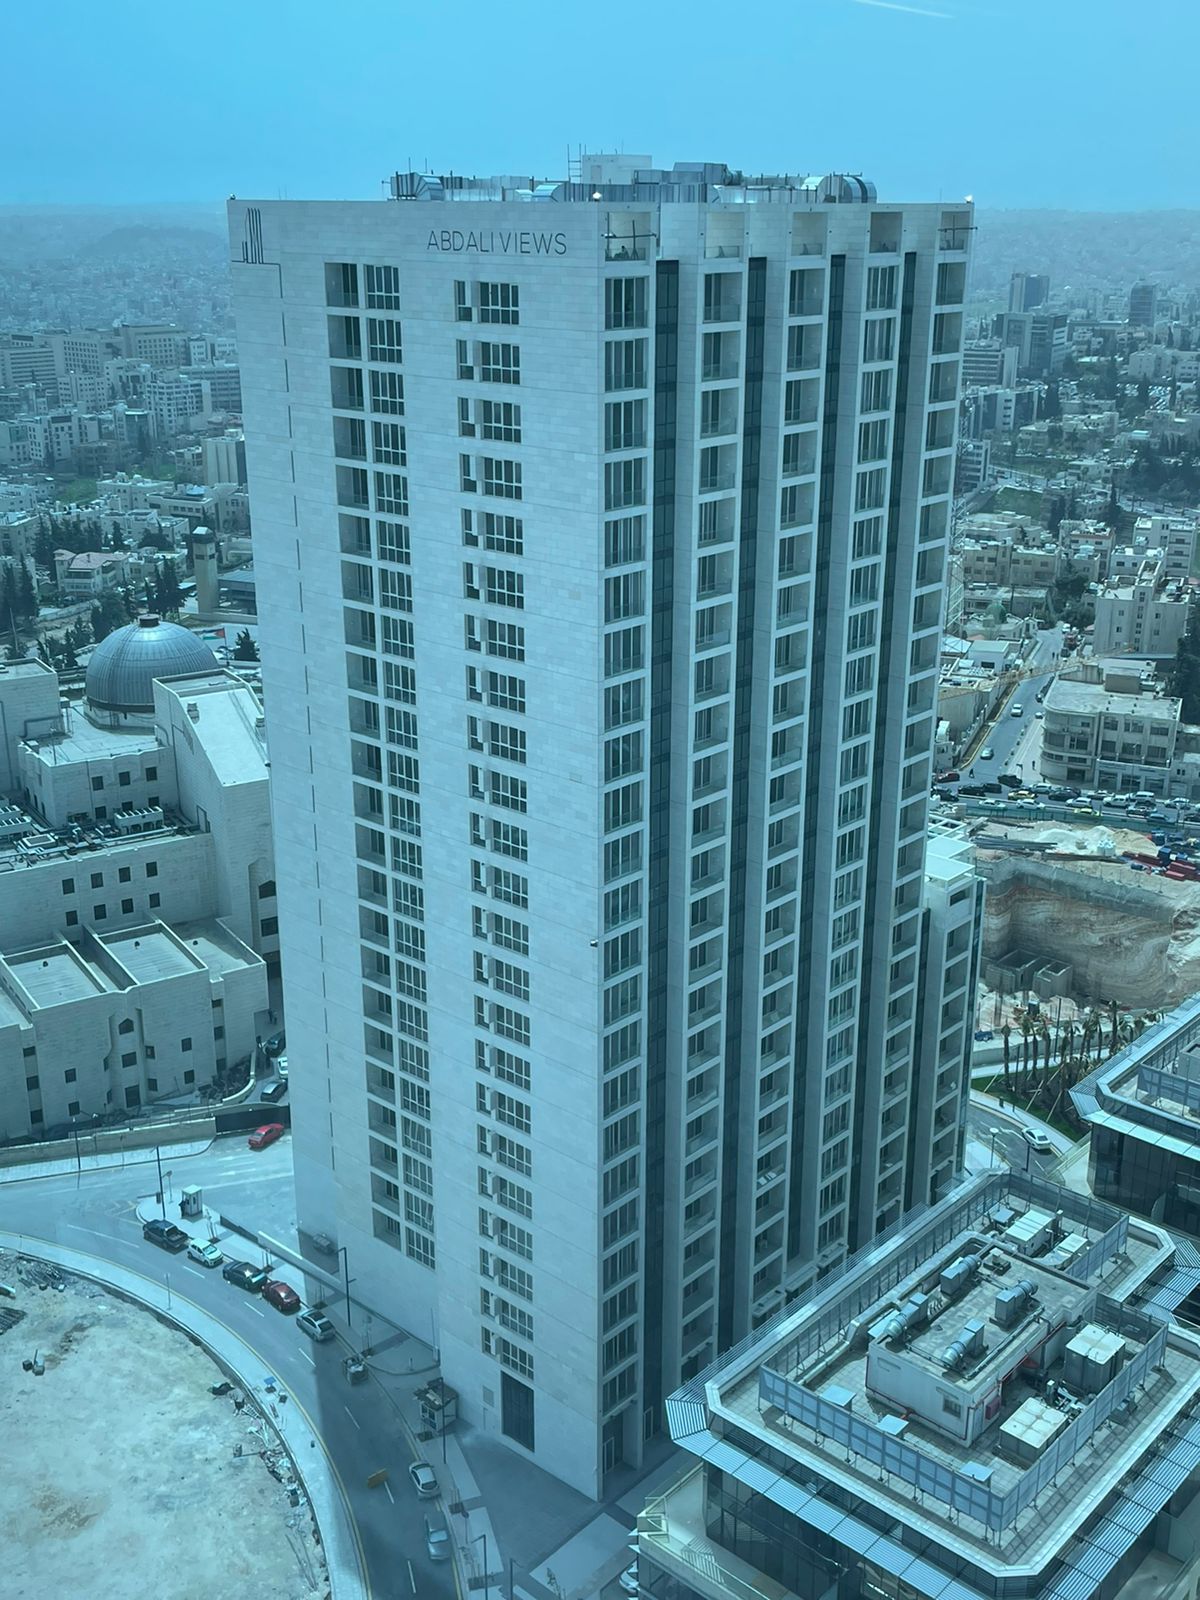 Abdali Views Tower